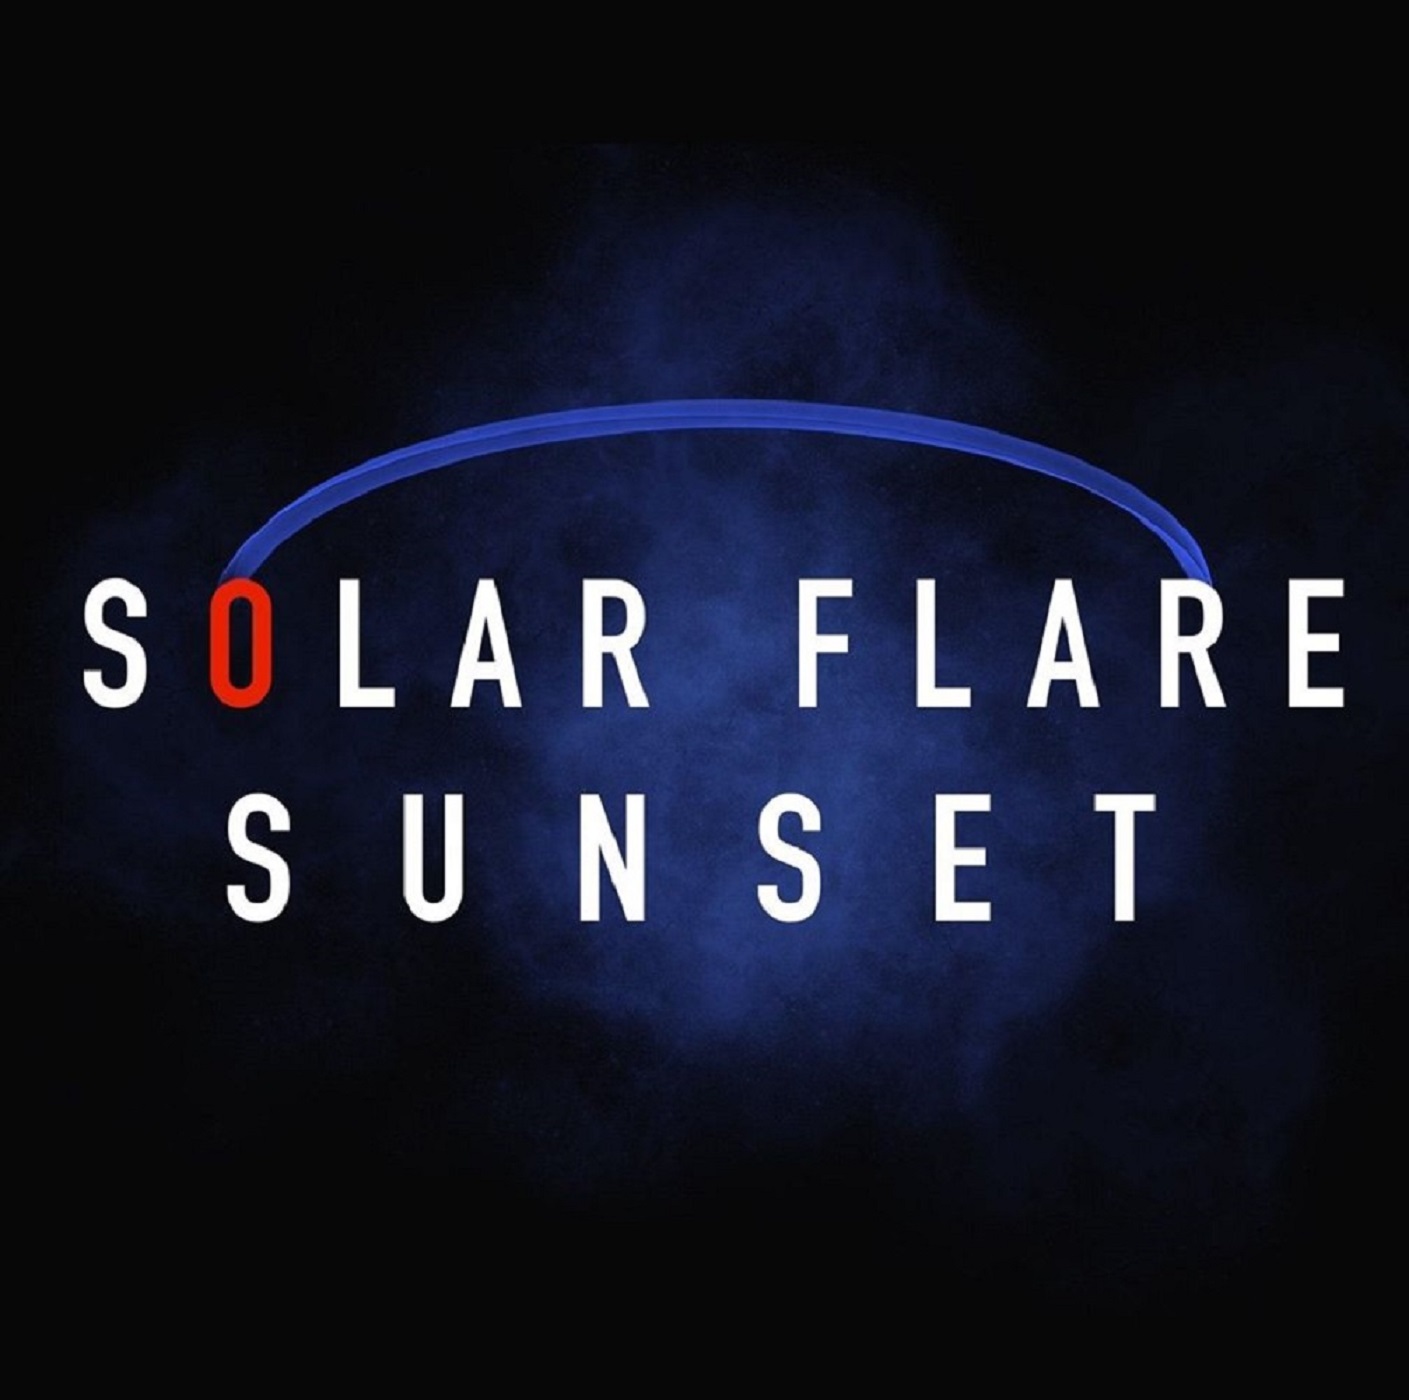 SOLAR FLARE SUNSET